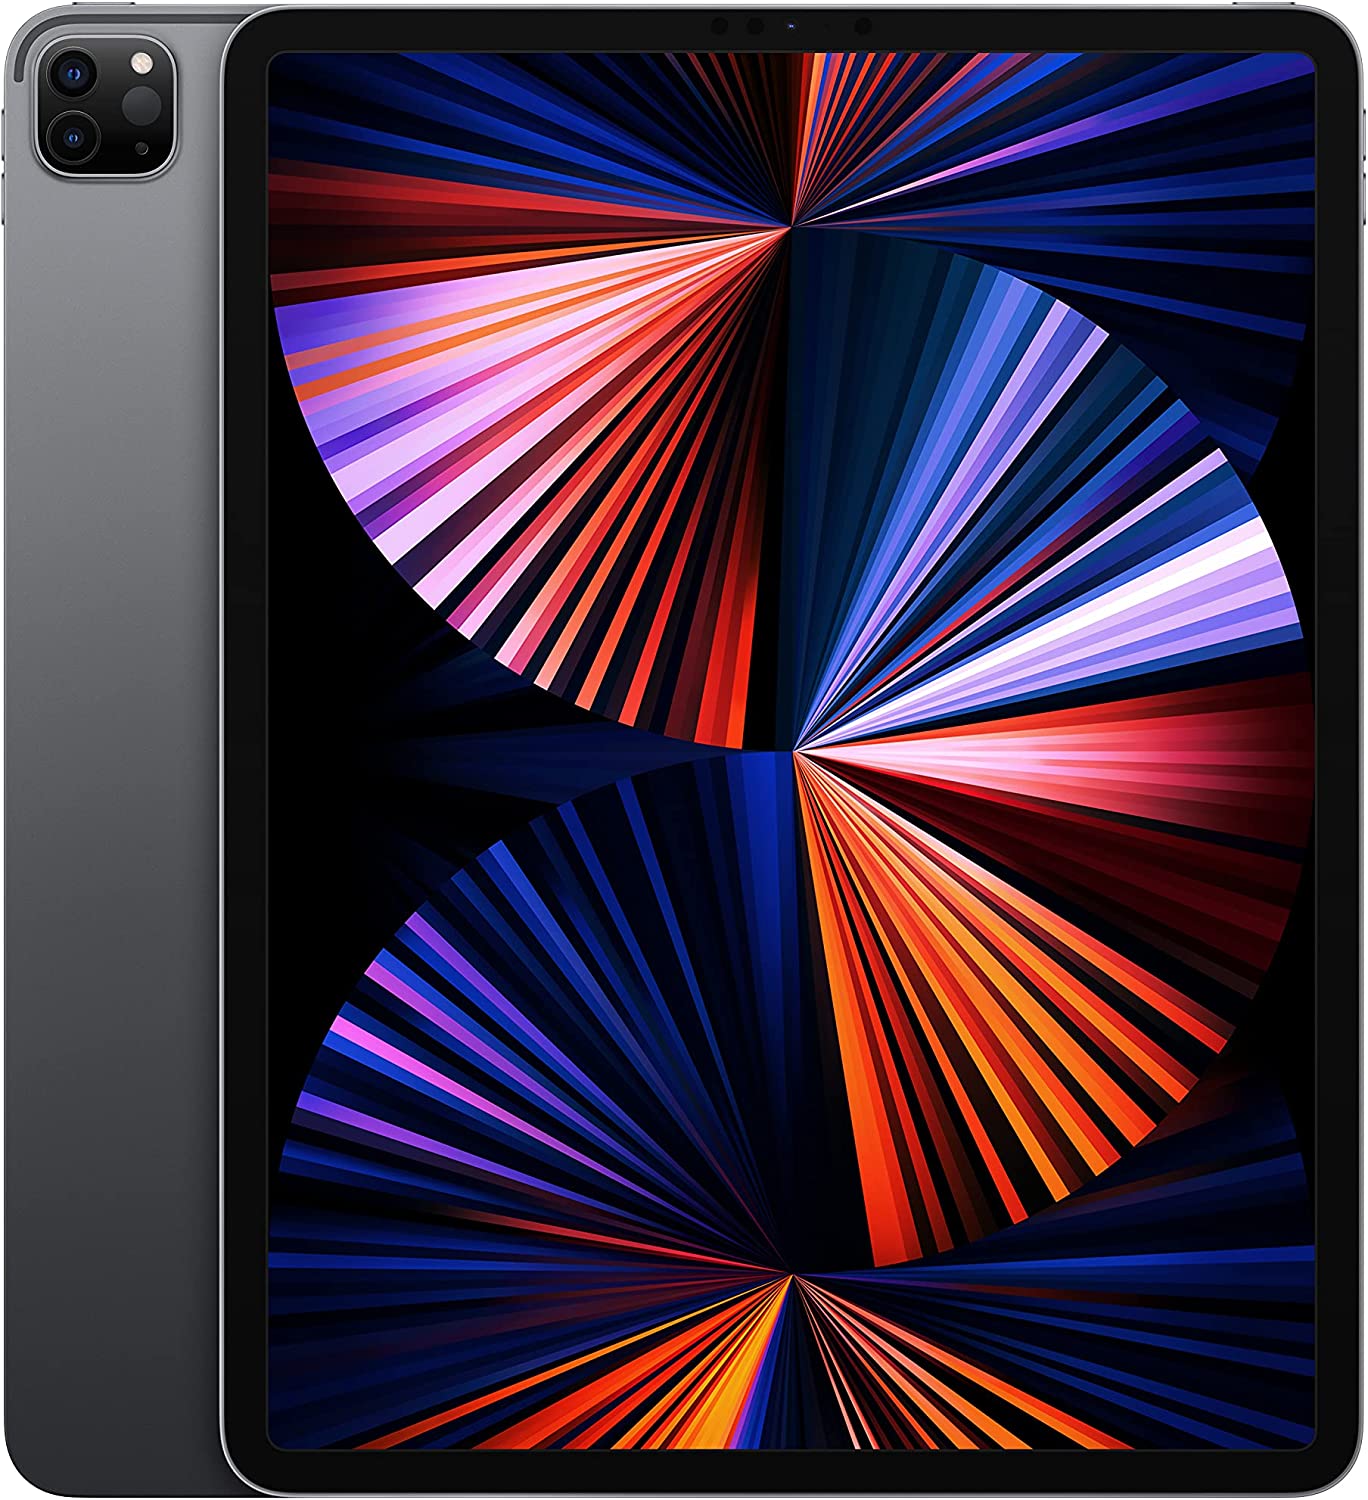 Apple 2021 iPad Pro (12.9-inch, Wi-Fi, 256GB) - Space Grey (5th Generation)